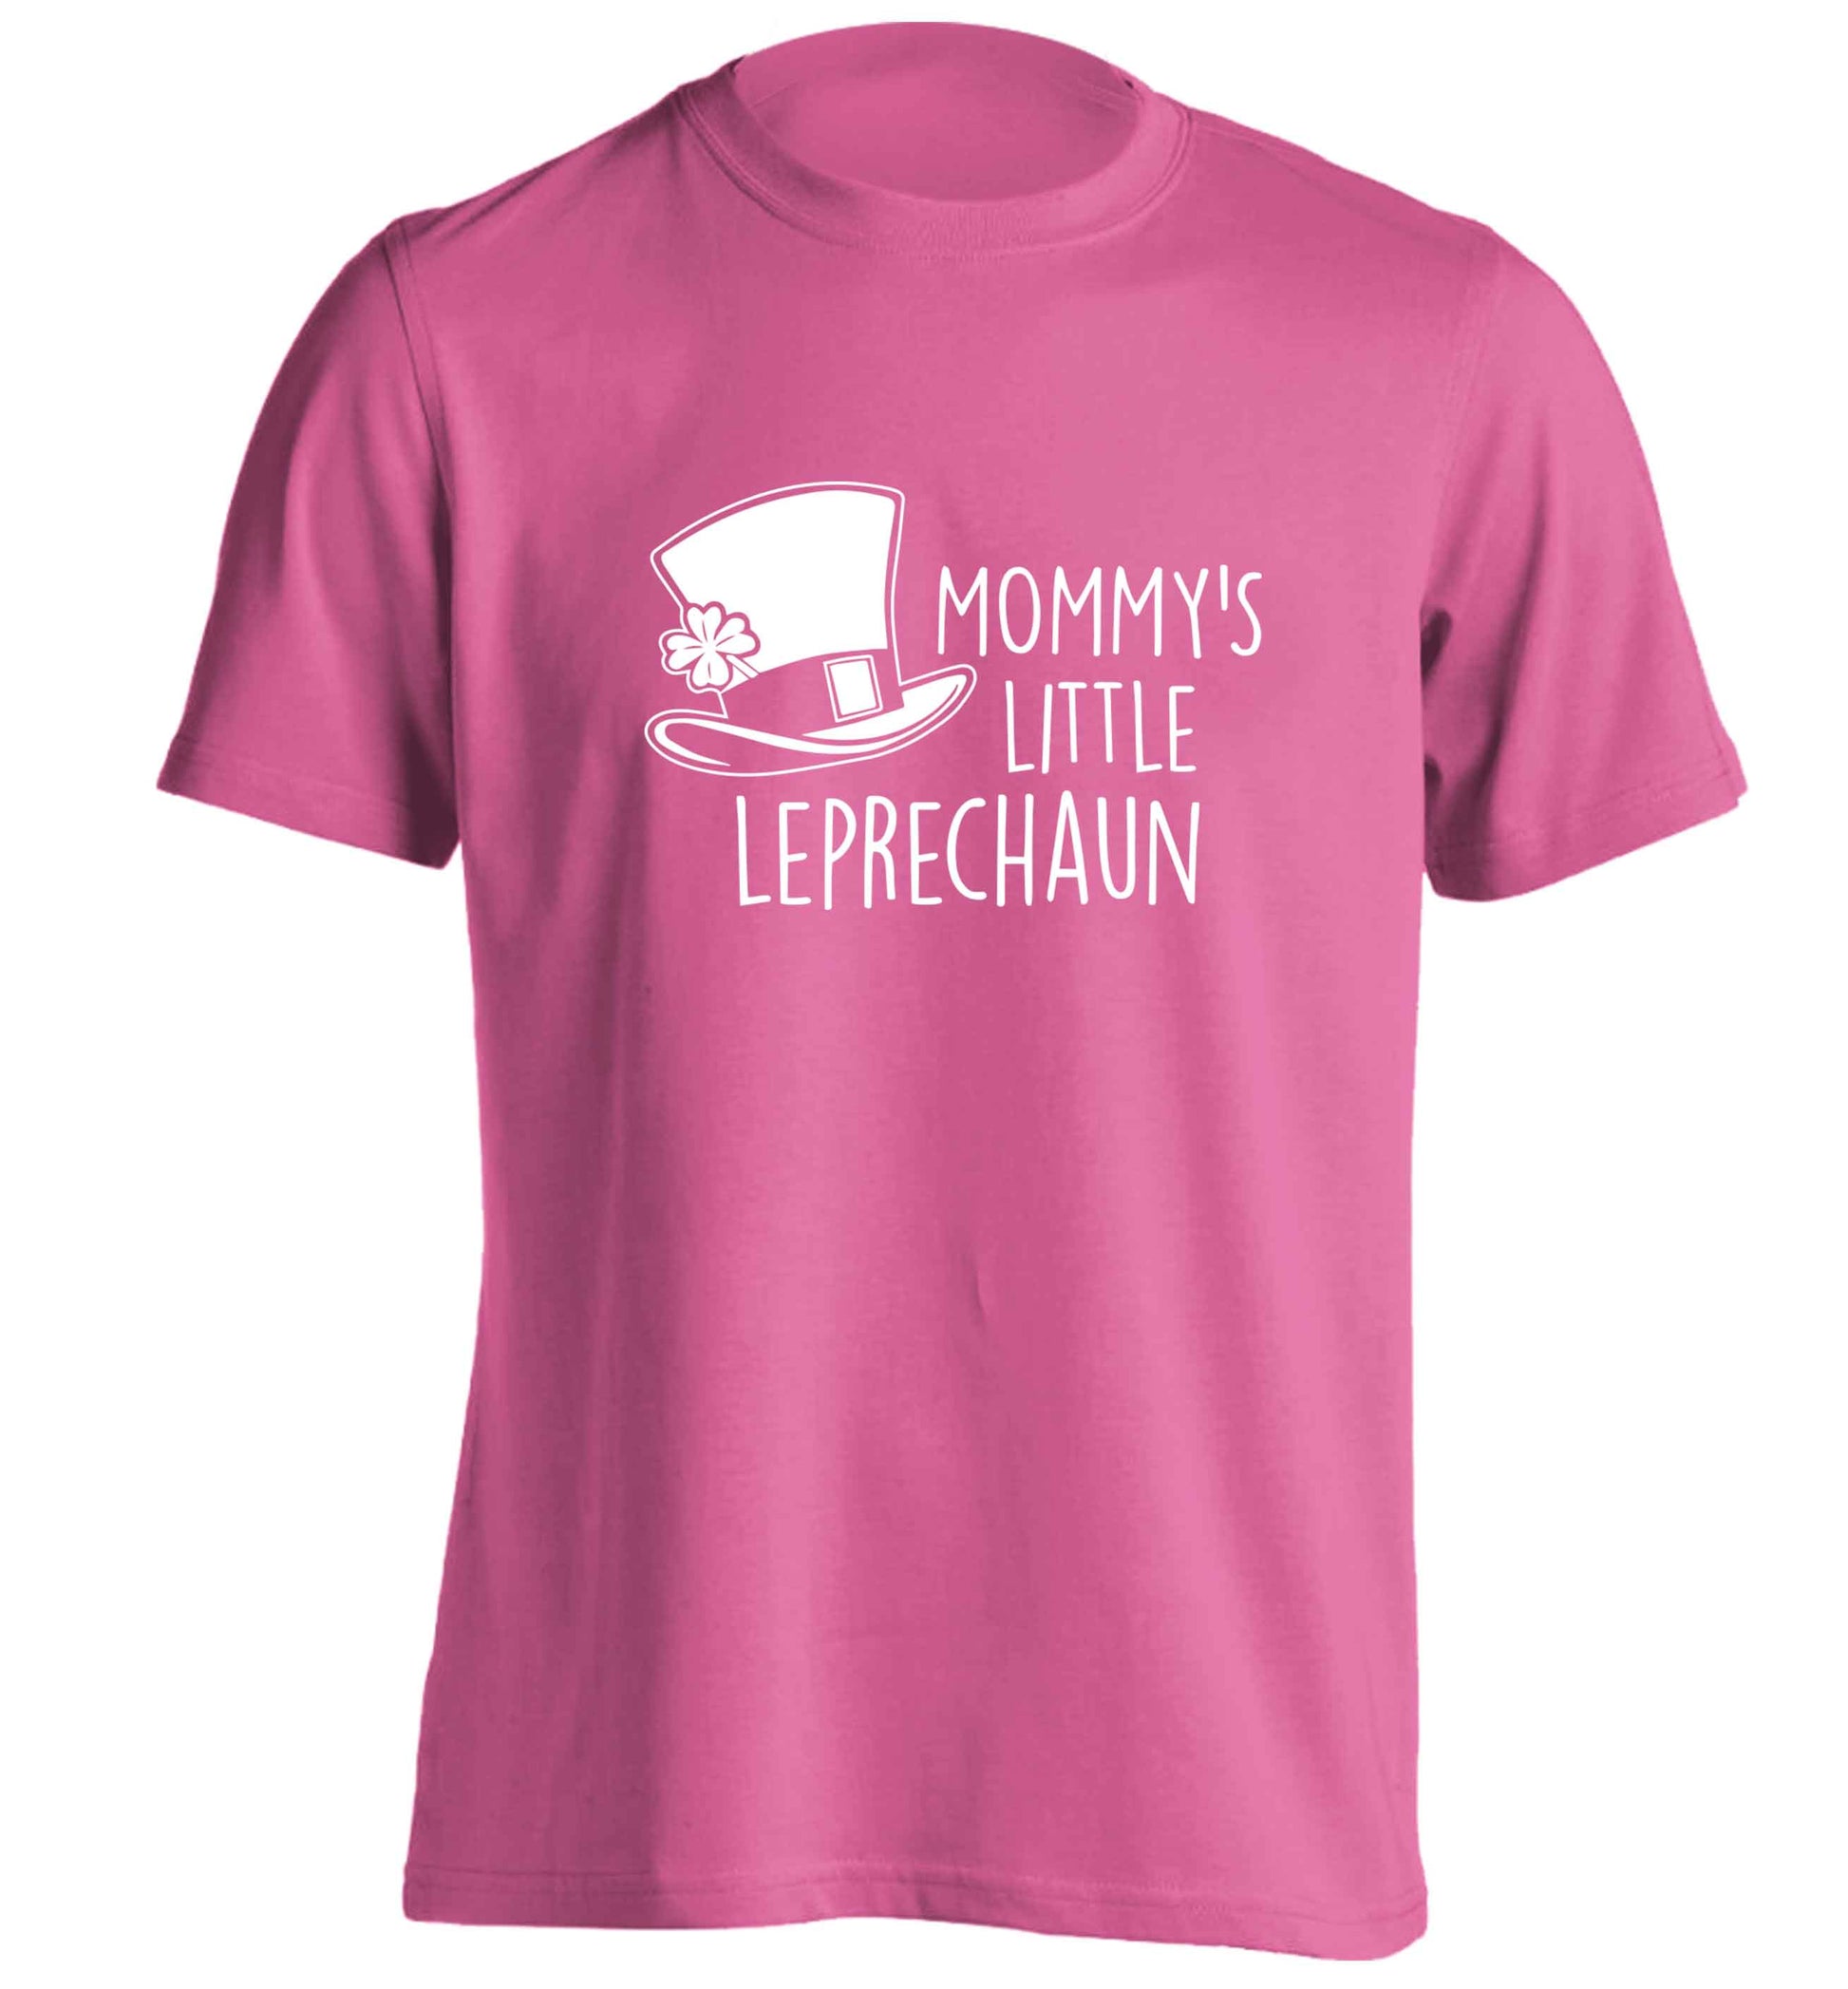 Mommy's little leprechaun adults unisex pink Tshirt 2XL